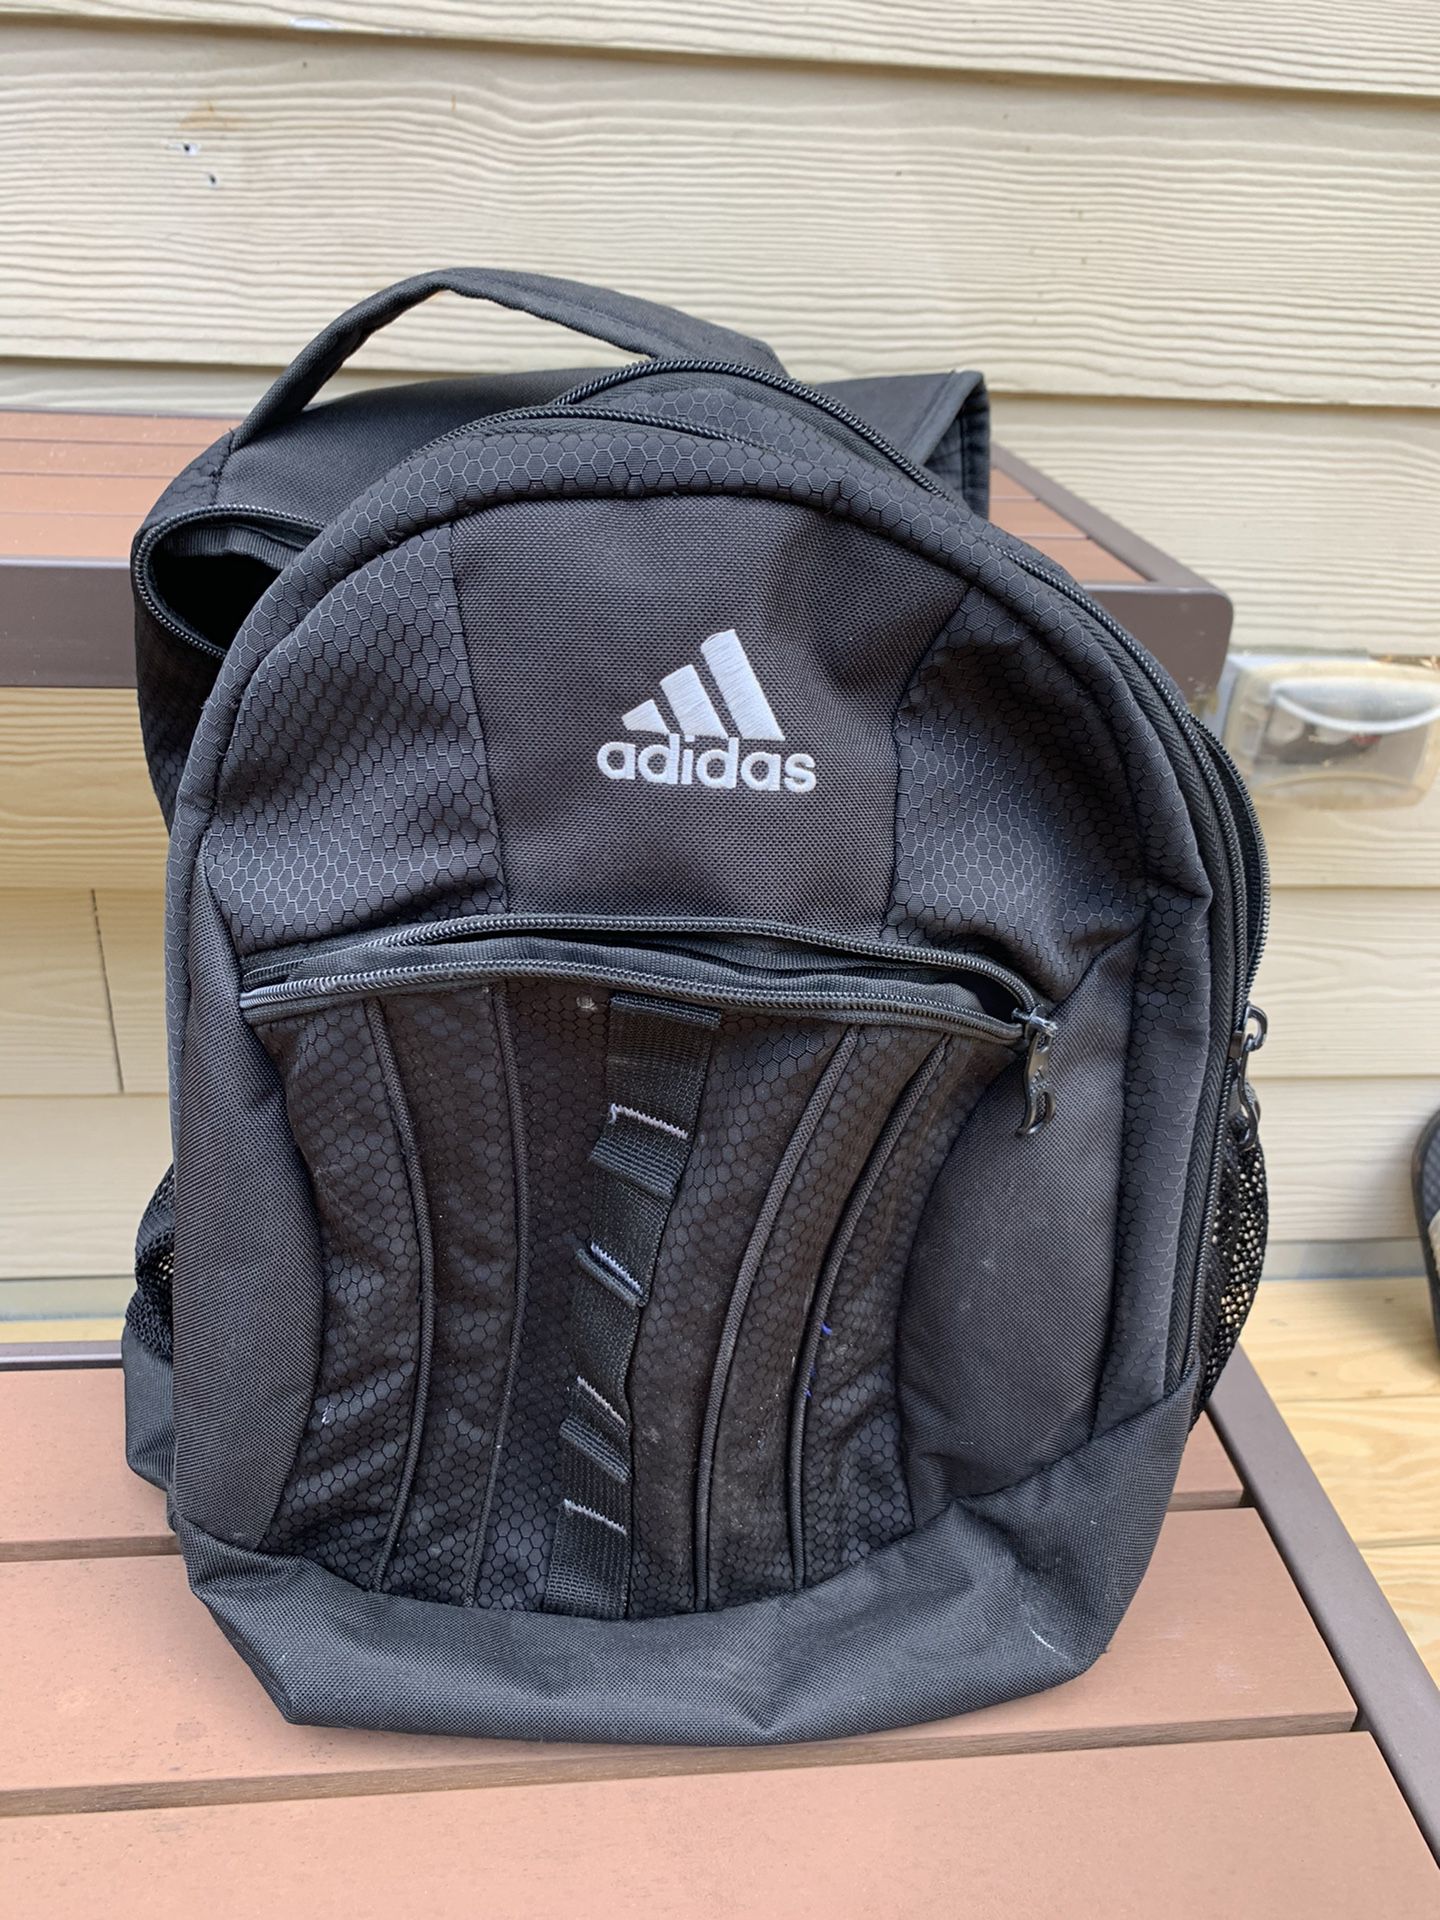 ADIDAS black backpack